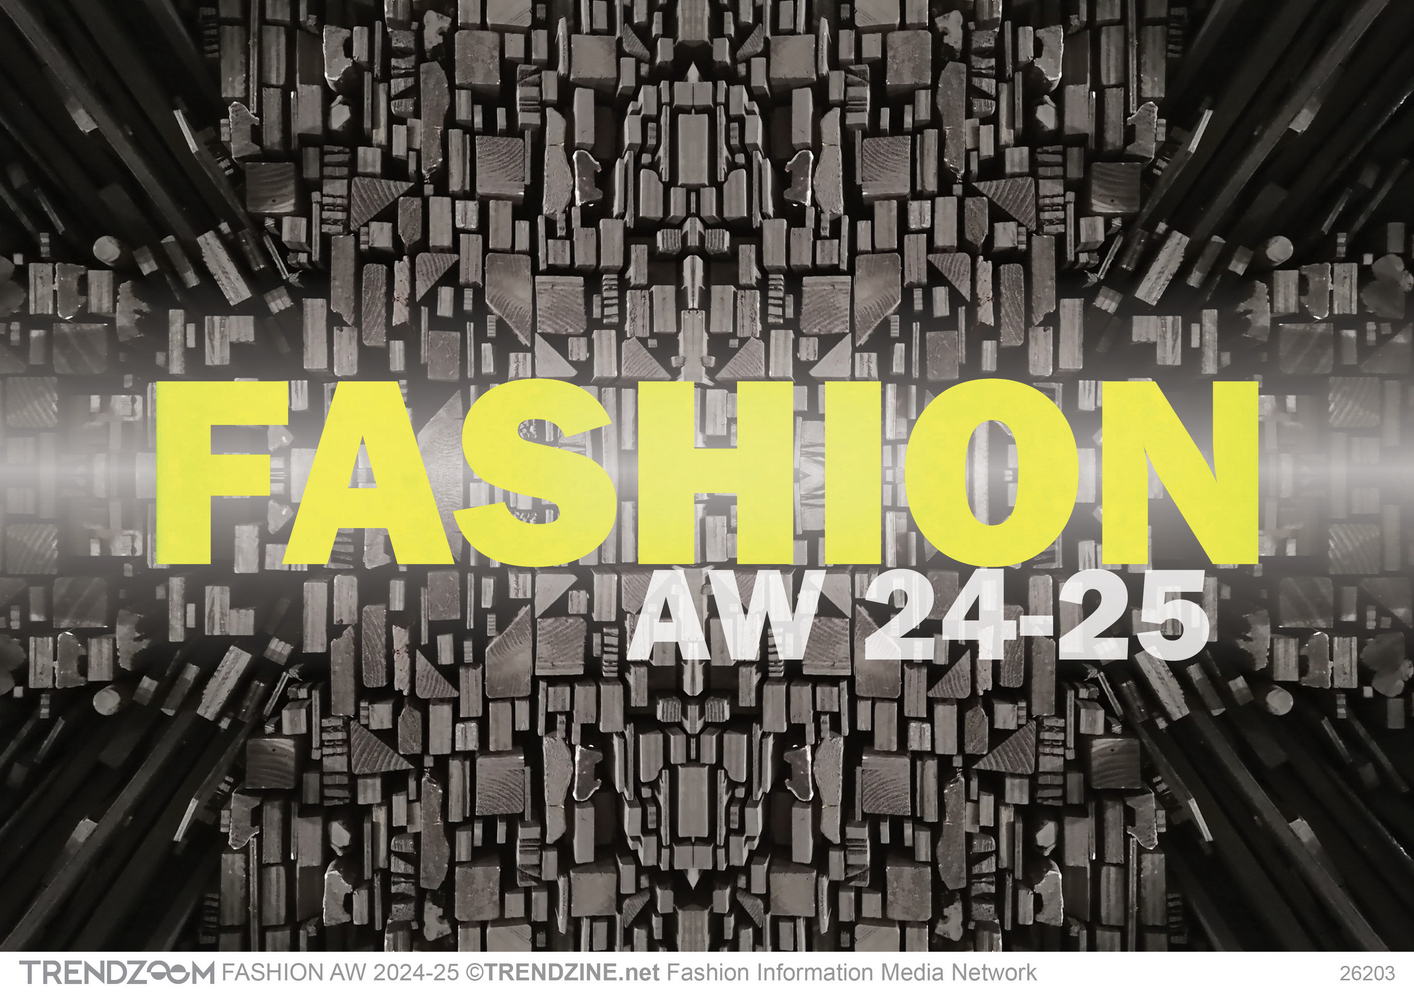 TRENDZOOM Fashion AW 24-25